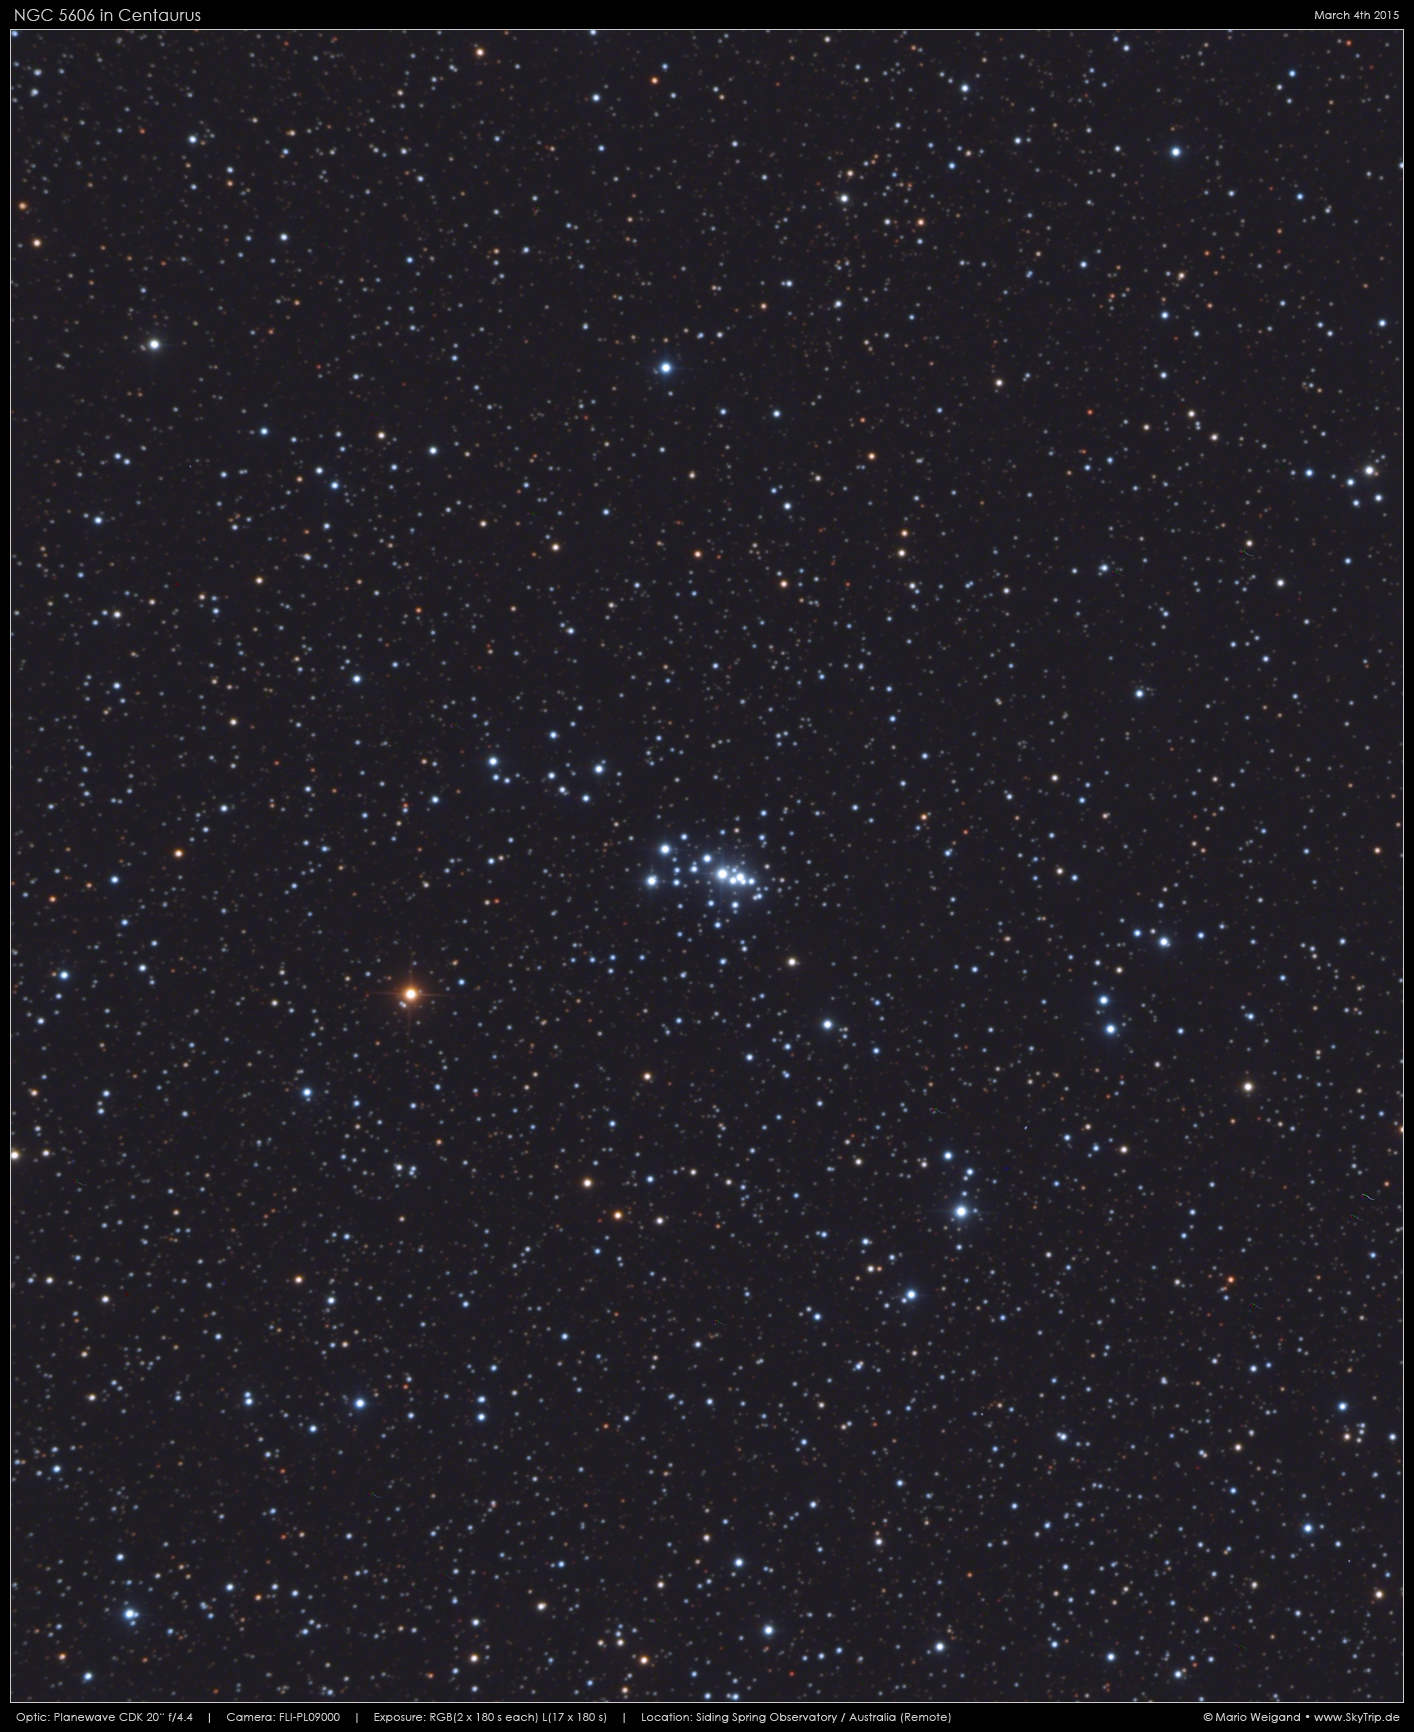 NGC 5606 in Sternbild Centaurus